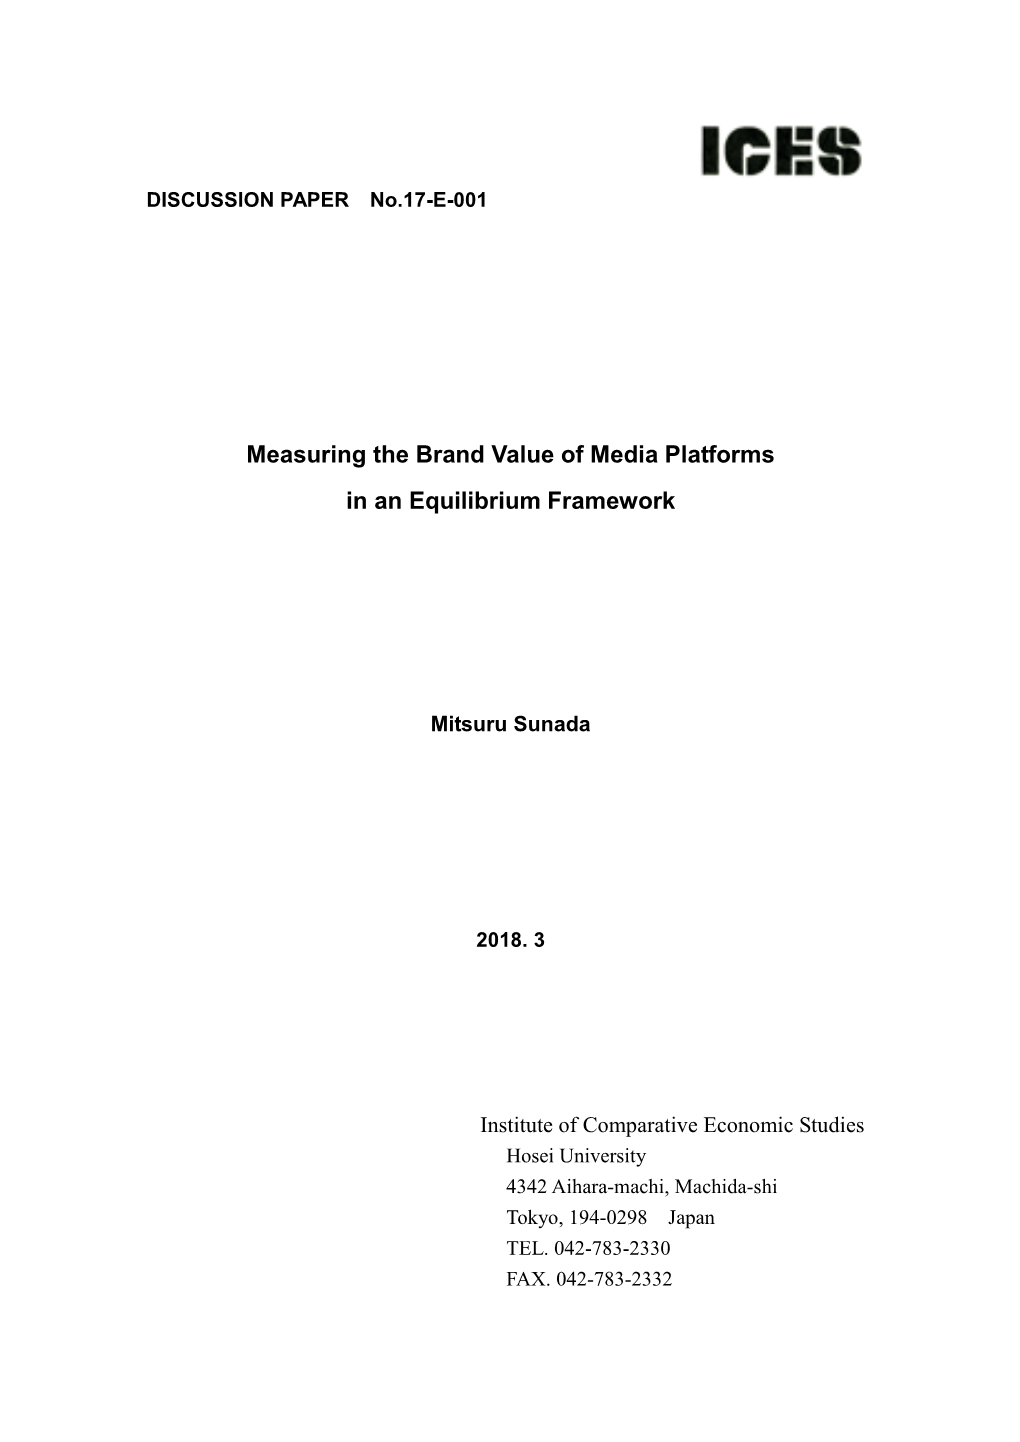 Measuring the Brand Value of Media Platforms in an Equilibrium Framework